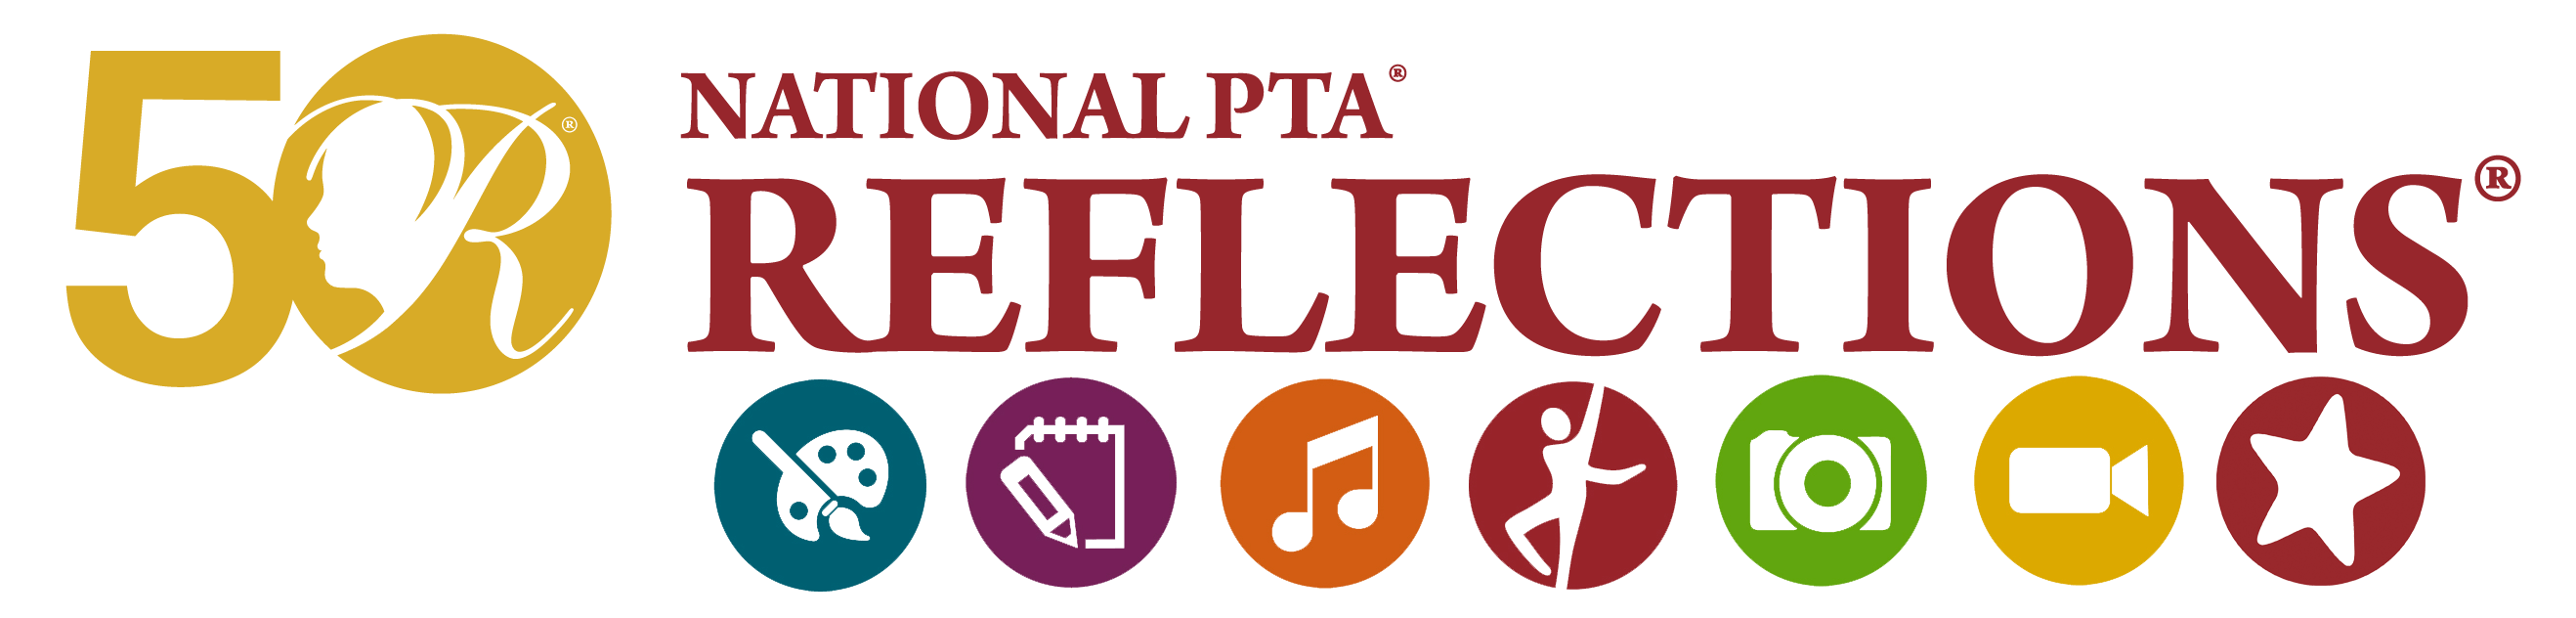 National PTA Reflections Logo - Sequoia Middle School > Parents > Reflections Program